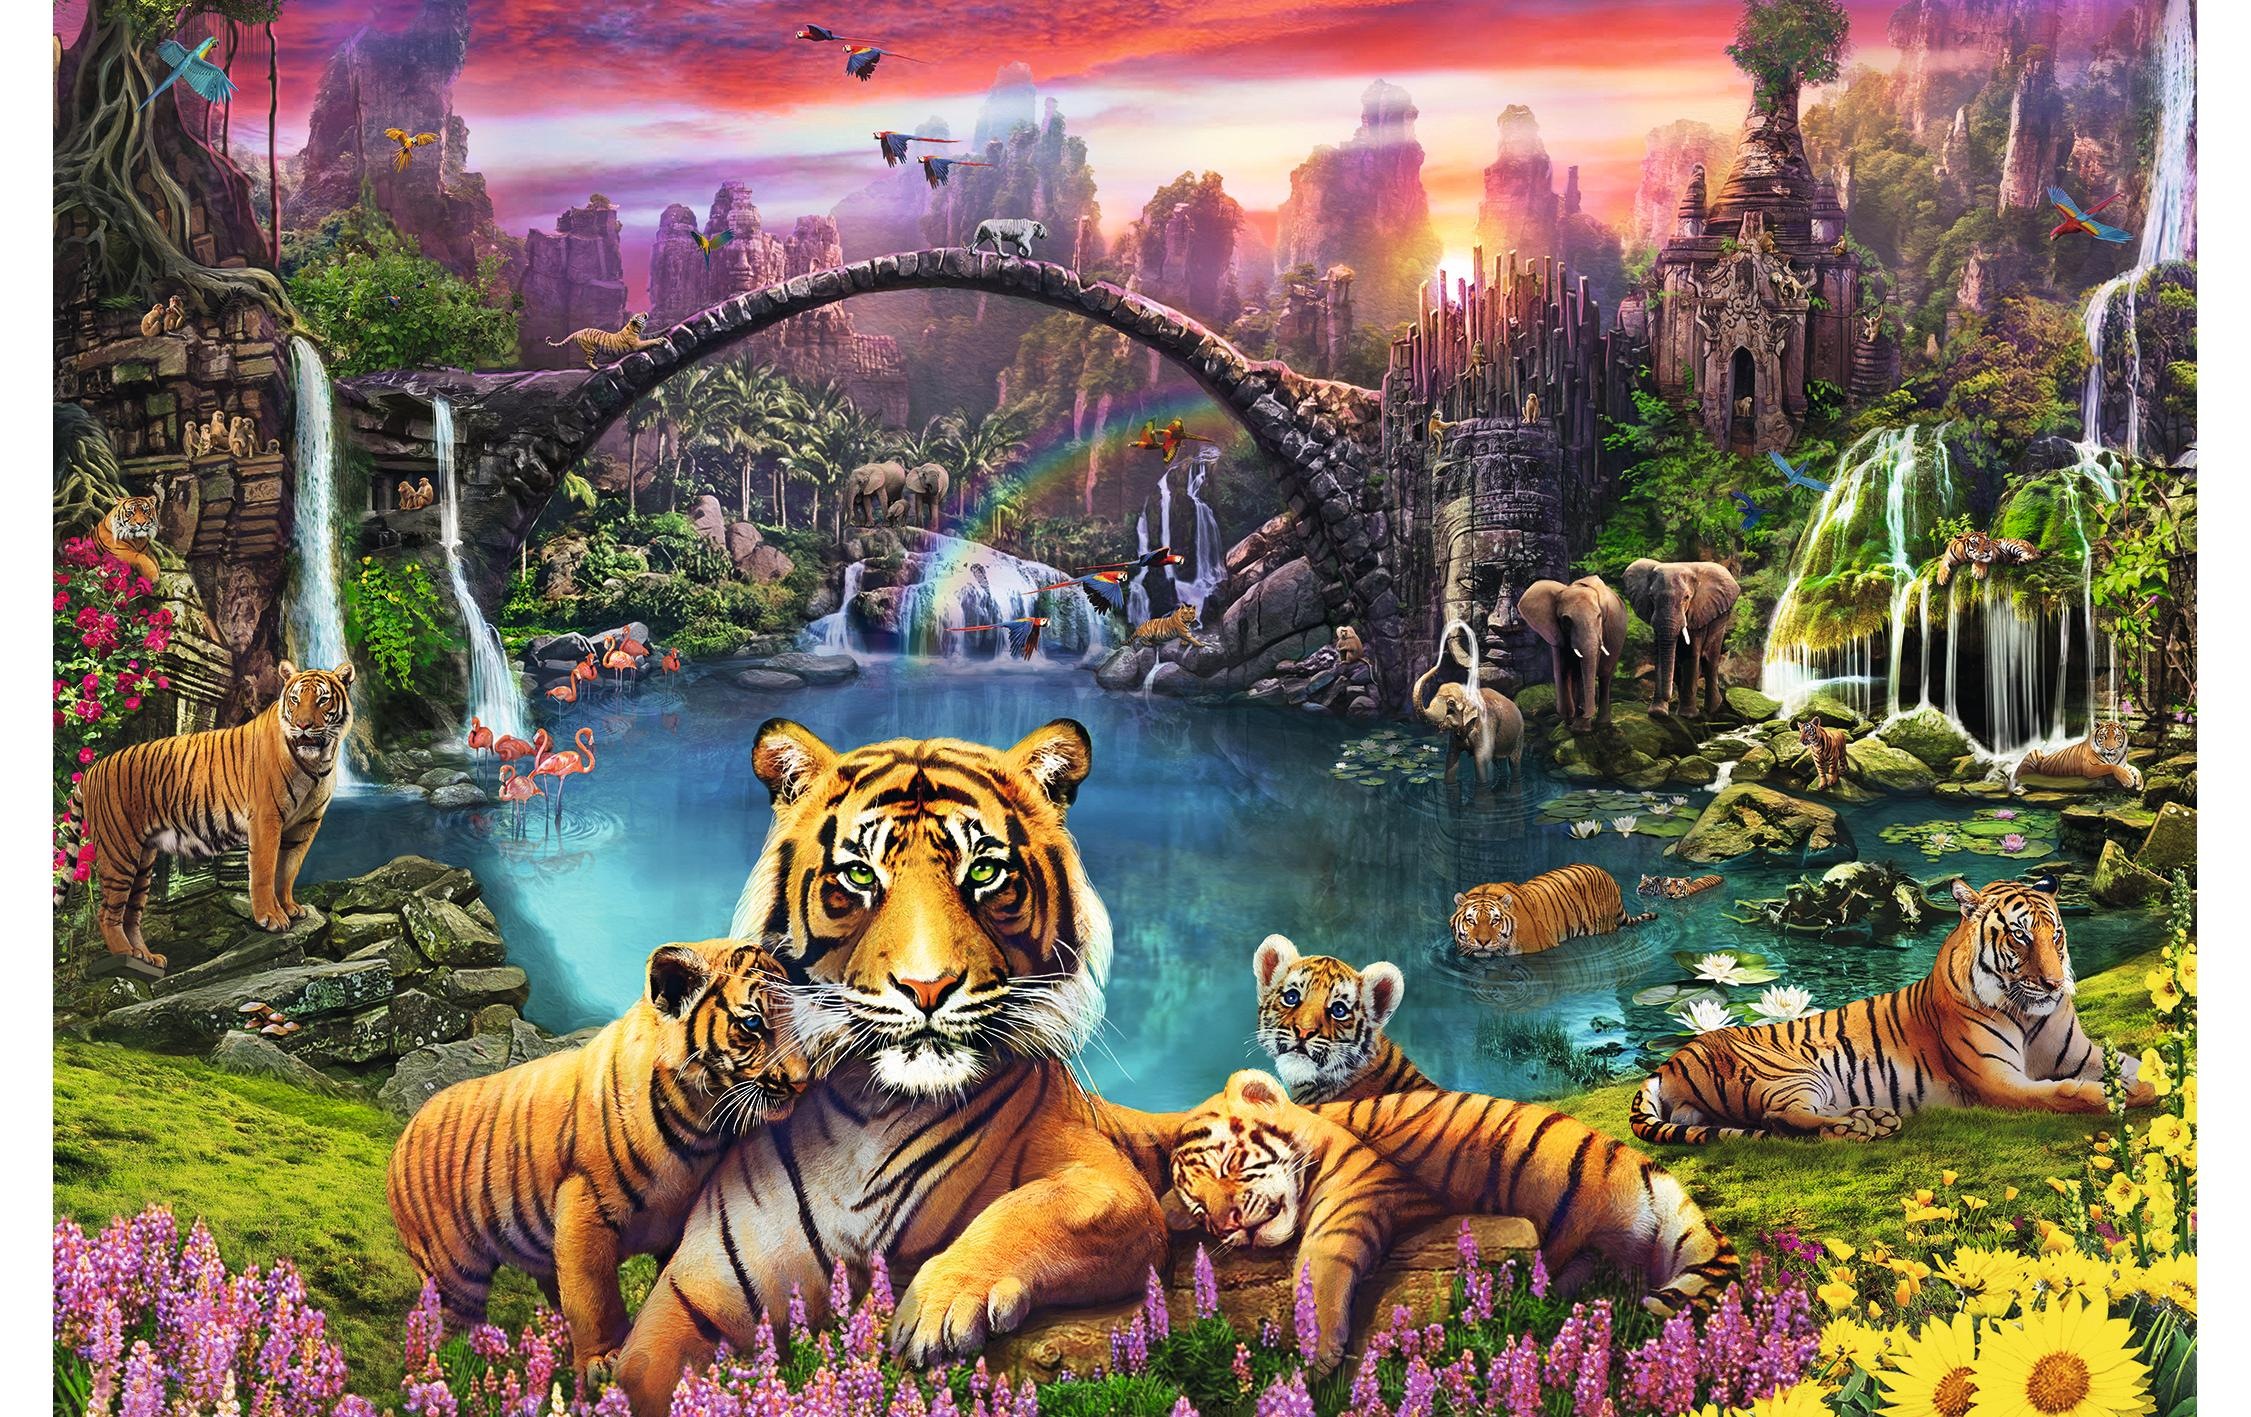 Ravensburger Puzzle »Tiger in paradi«